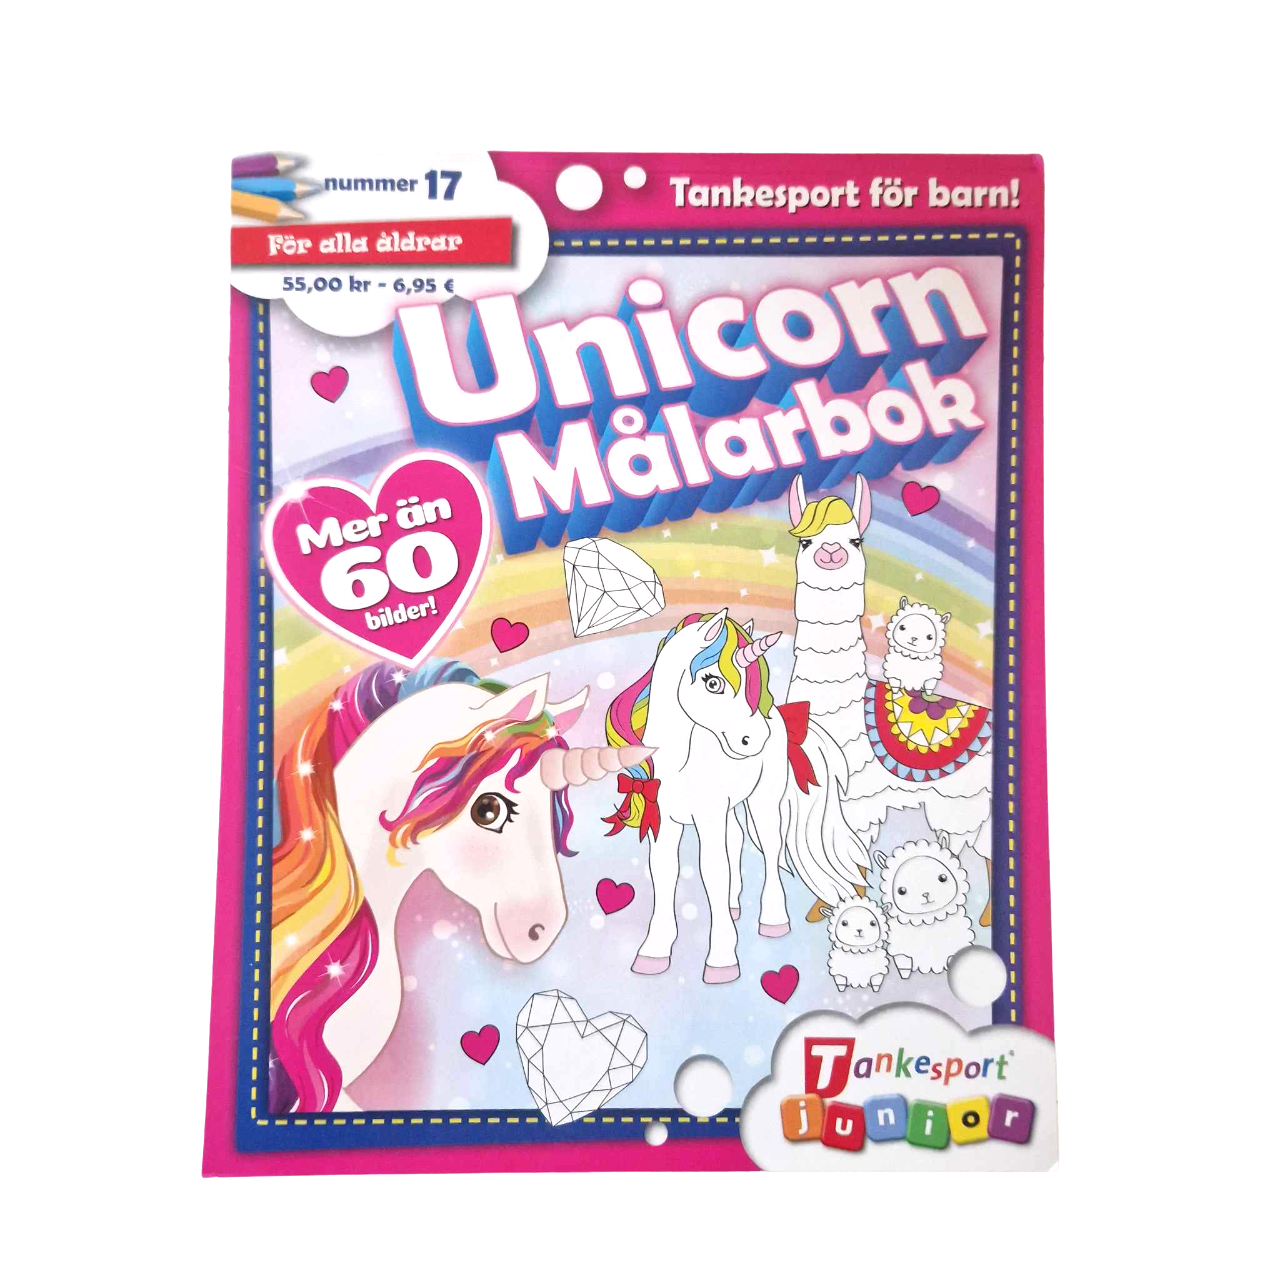 En helt magiska målarbok med massor av unicorns m.m!